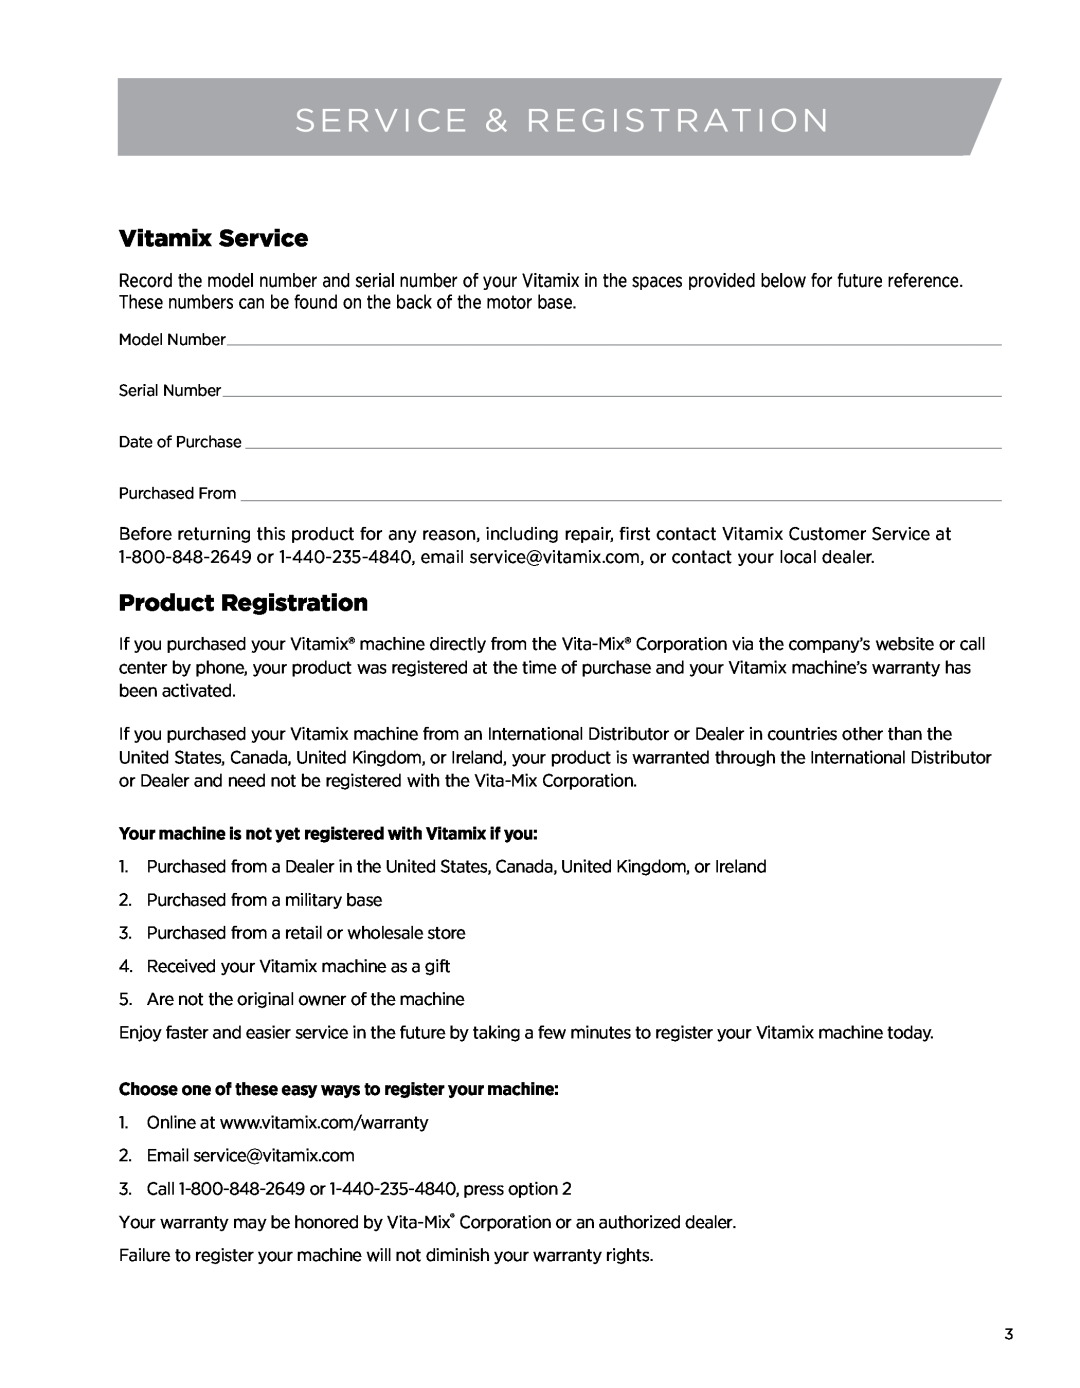 Vita-Mix 5200 owner manual SERVICE & registration, Vitamix Service, Product Registration 